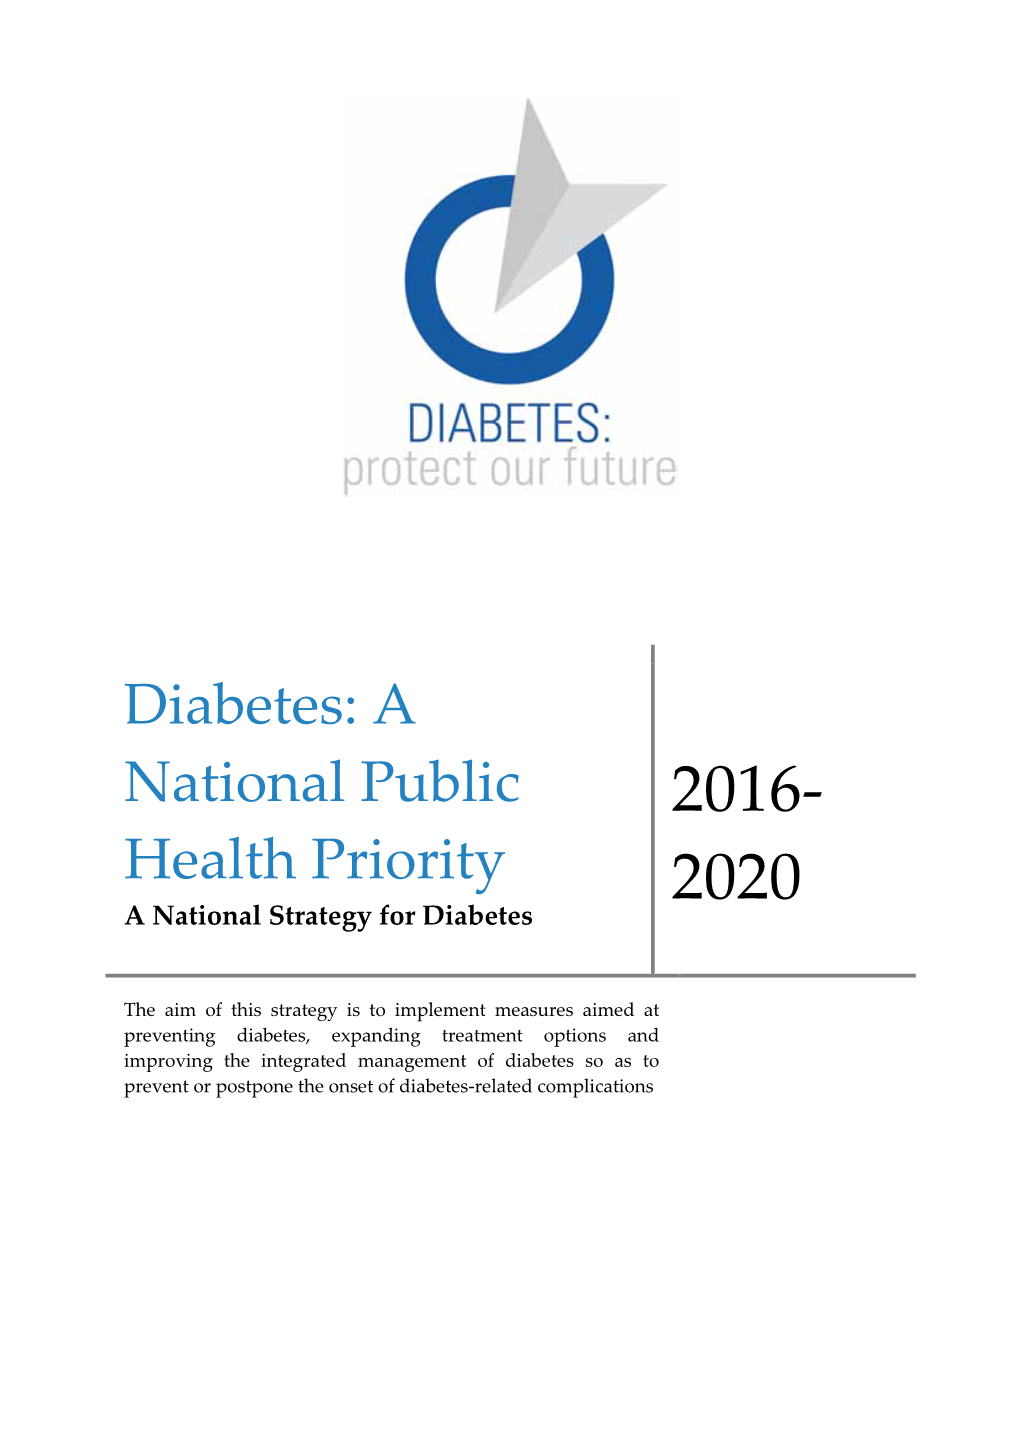 Diabetes: a National Public Health Priority